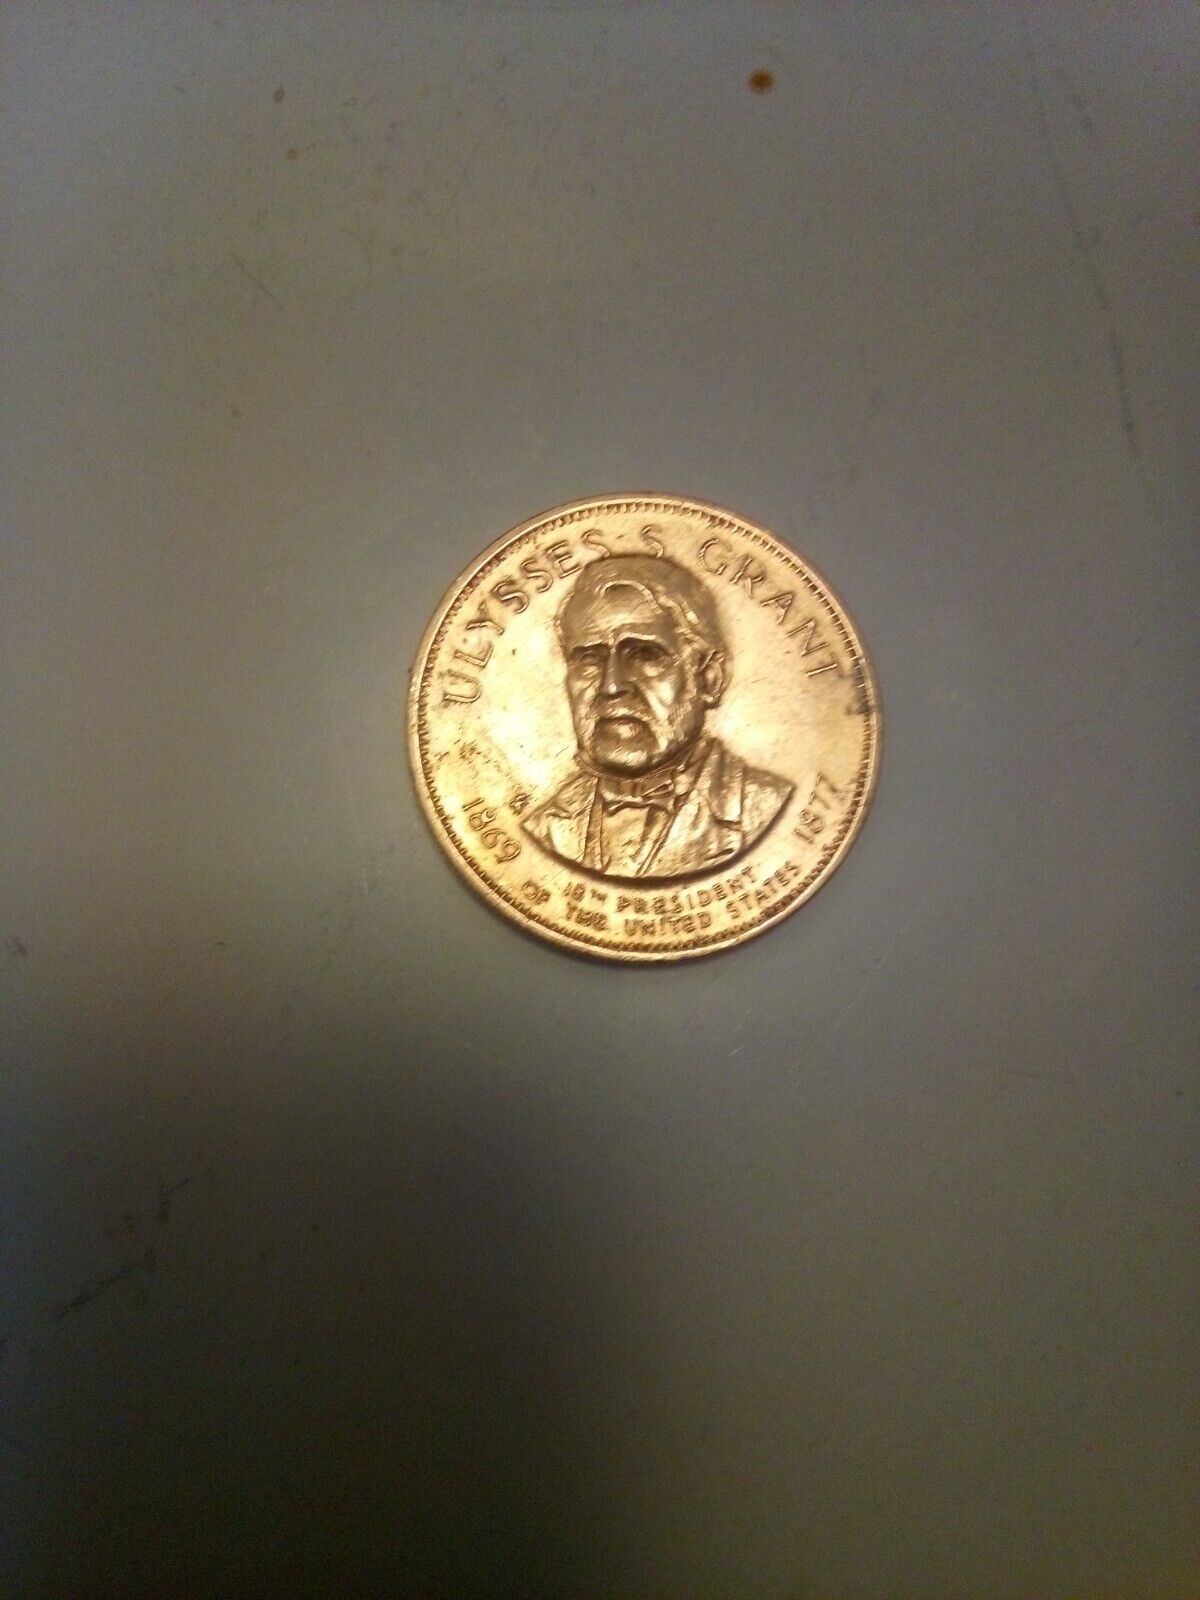 RARE Antique Ulysses S. Grant $1 Dollar Coin 1869-1877 -  18th President